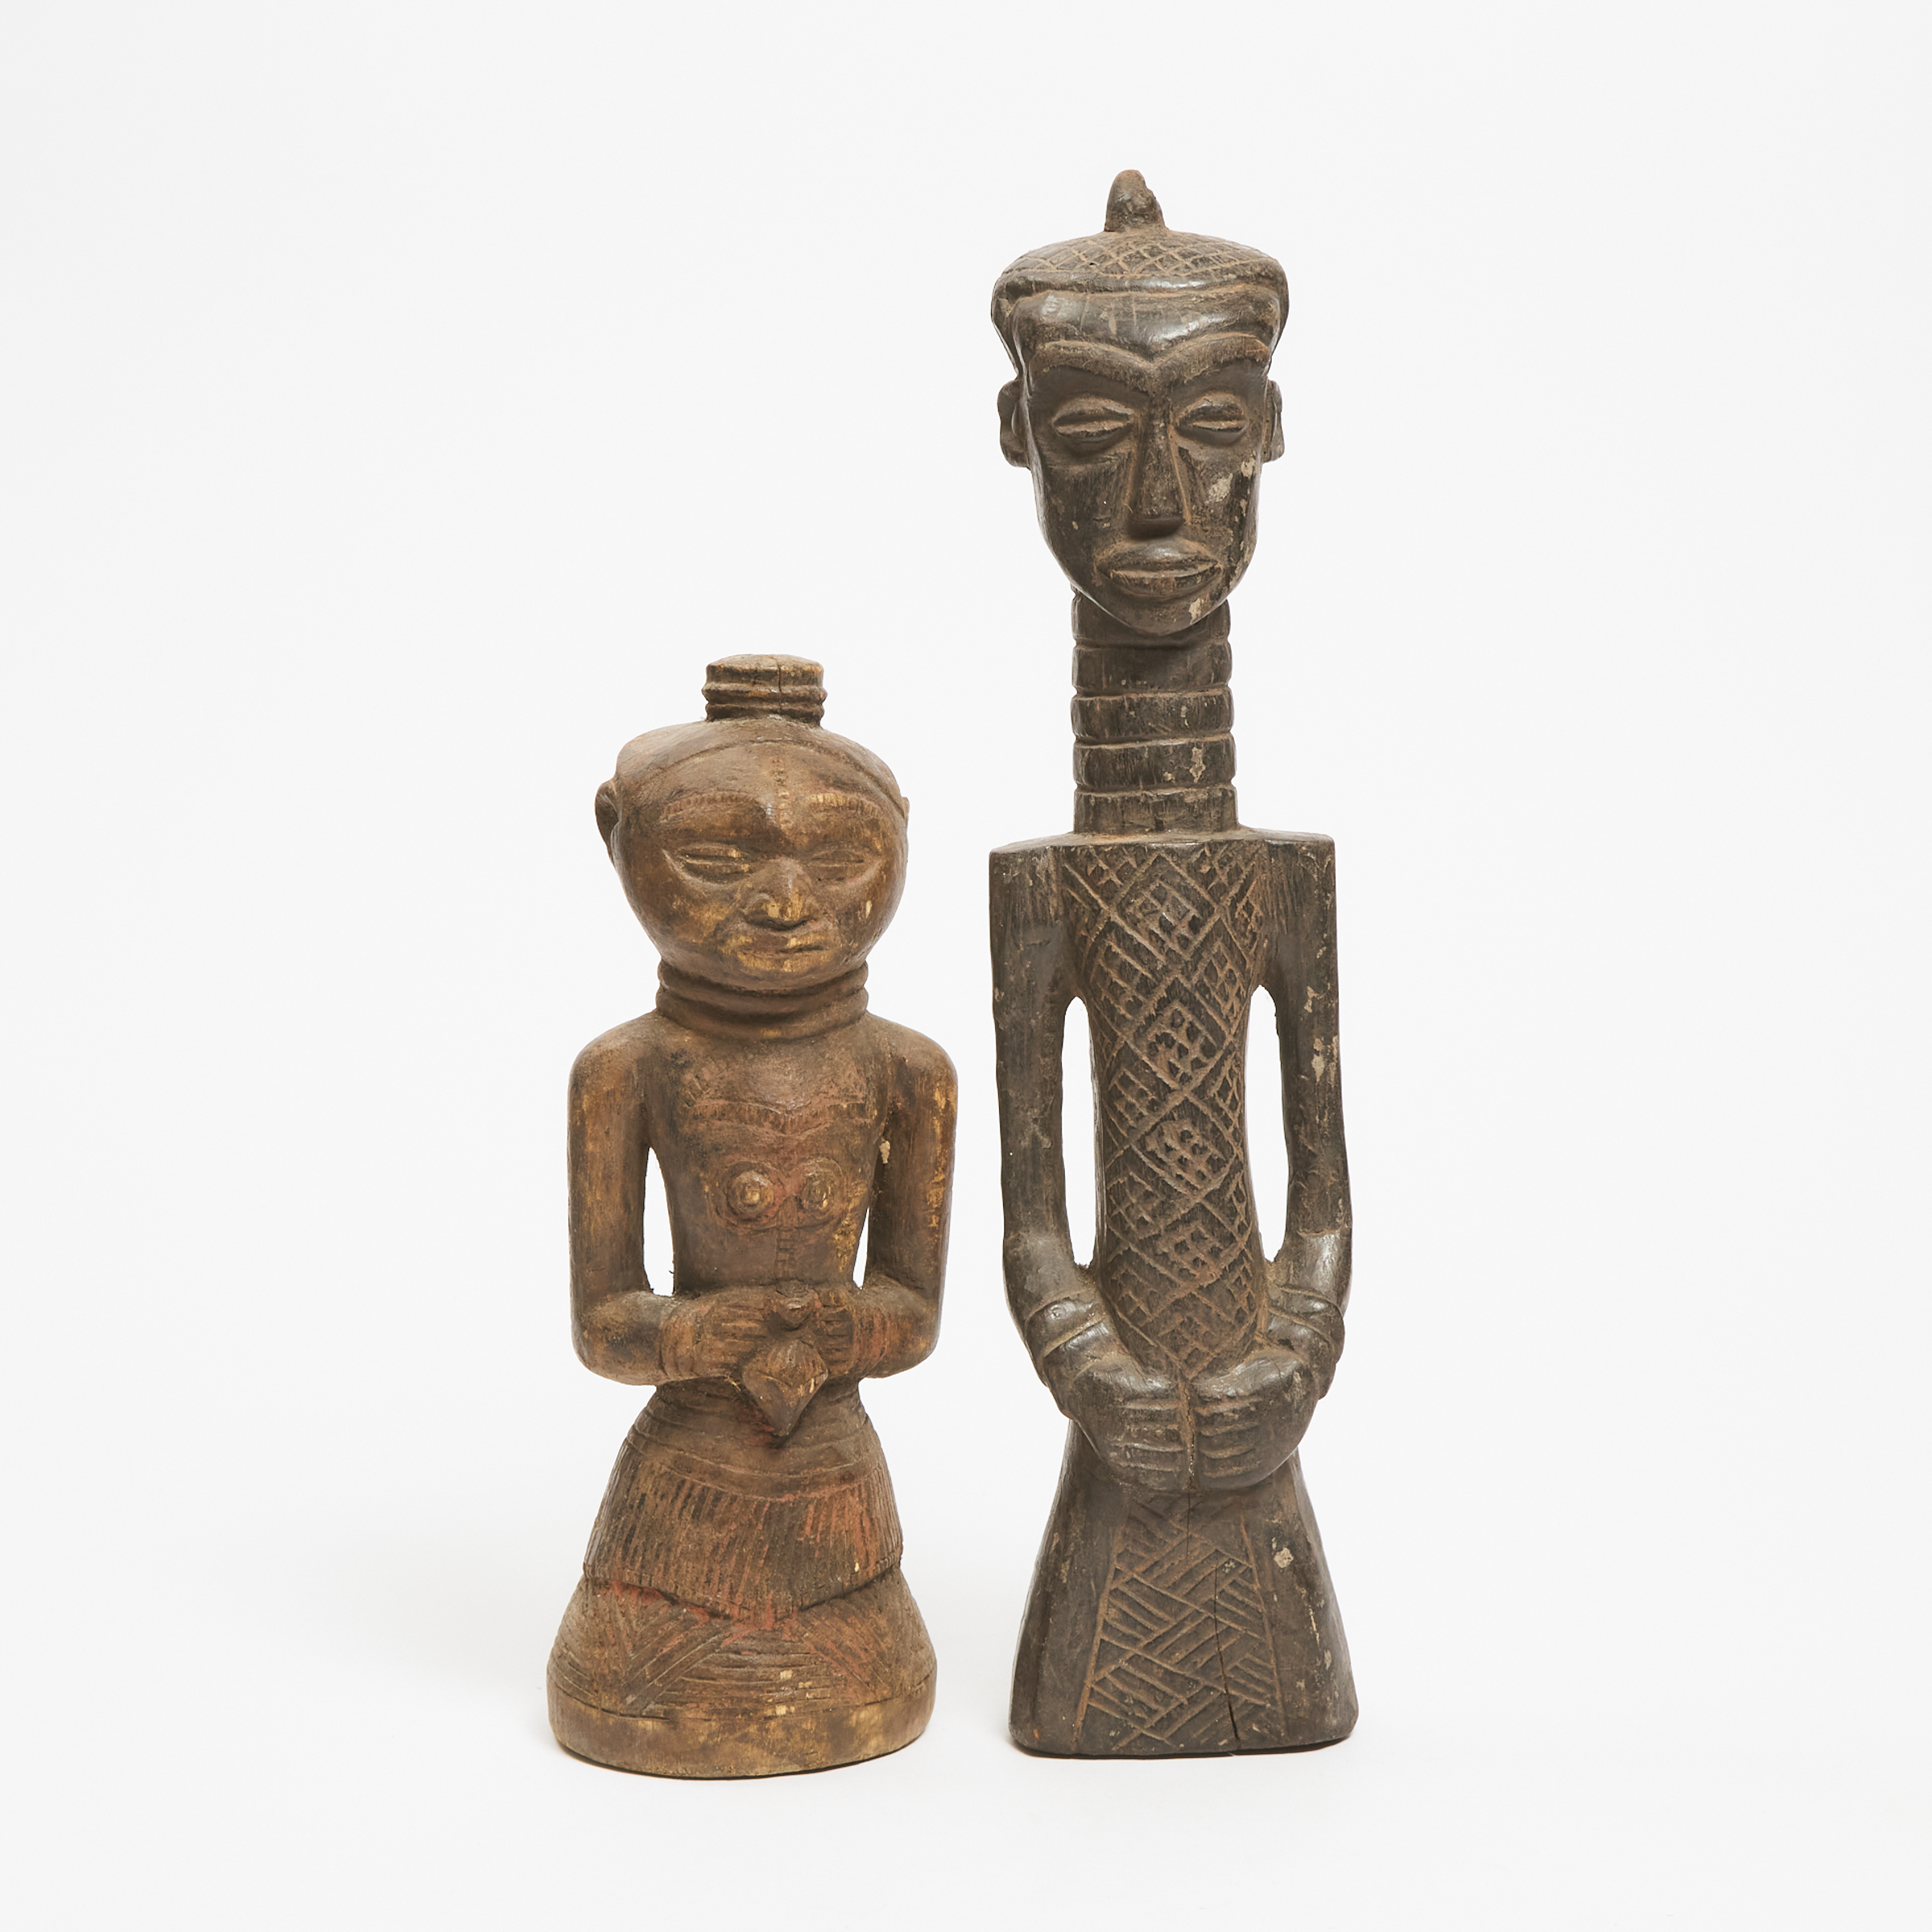 Two Kuba/Lulua Figures, Democratic Republic of Congo, Central Africa, 20th century